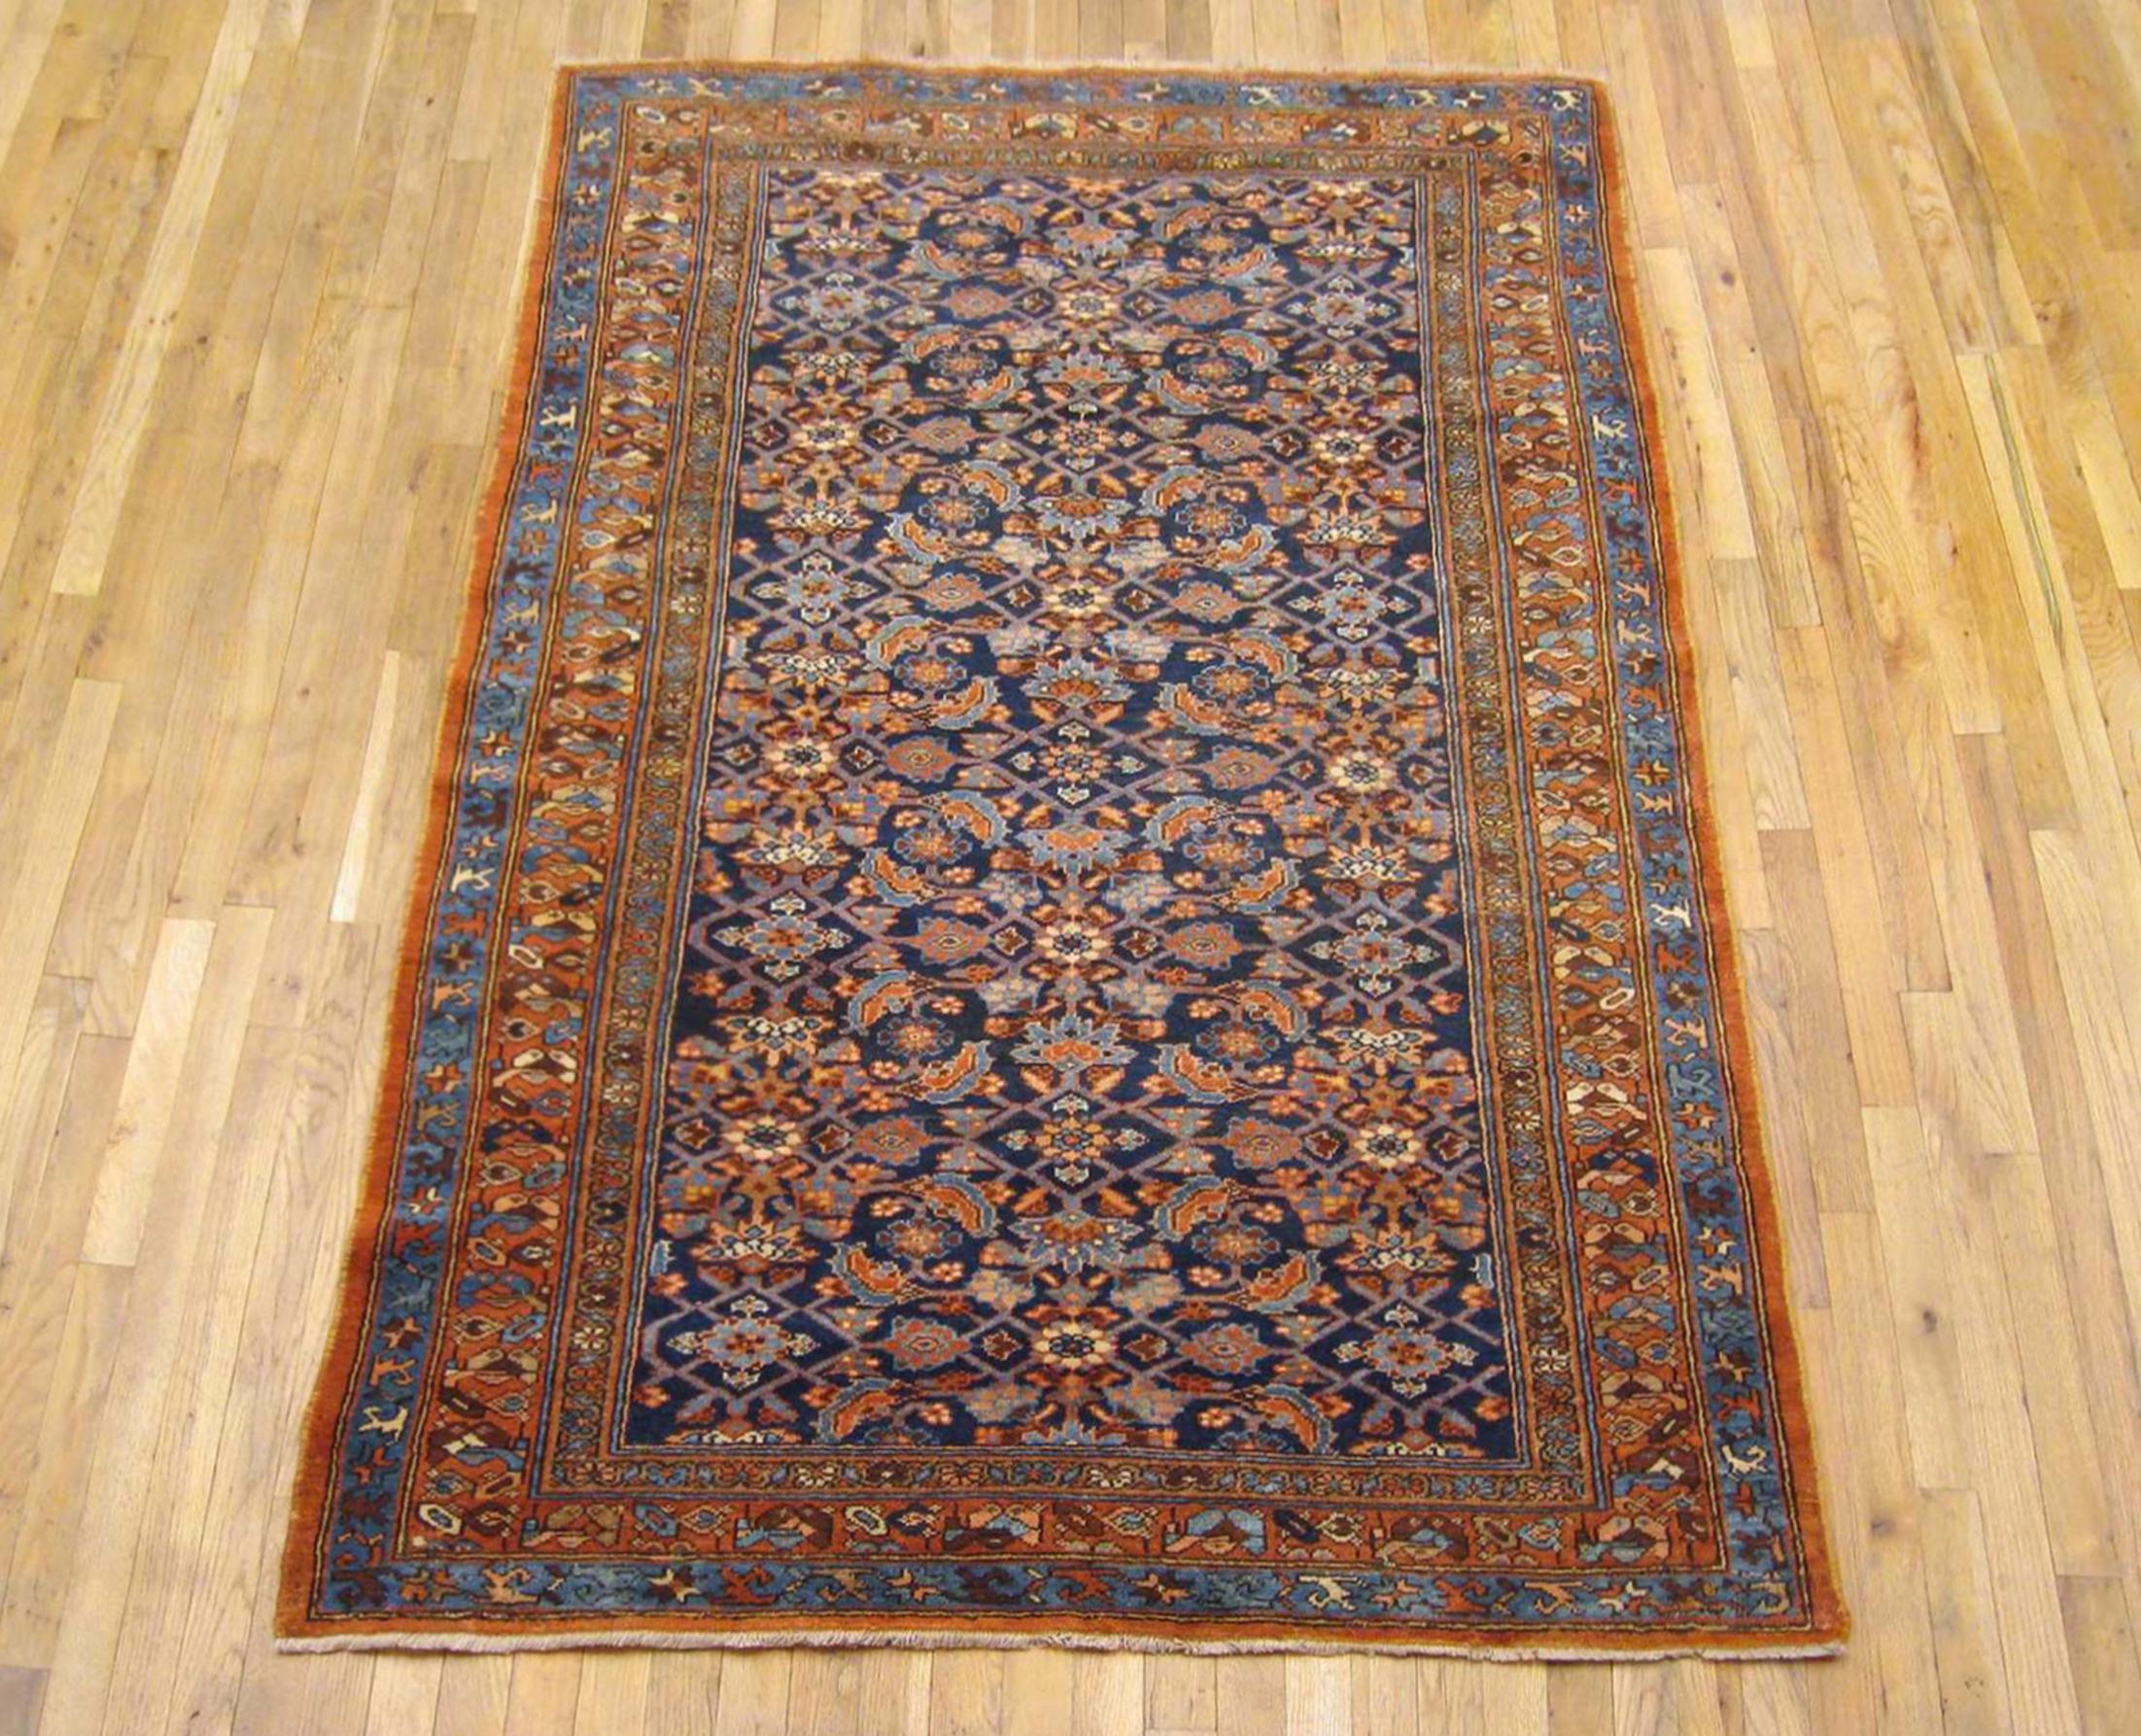 Antique Persian Hamadan Oriental rug, Small size

A vintage Persian Hamadan oriental rug in small size, size 6'6